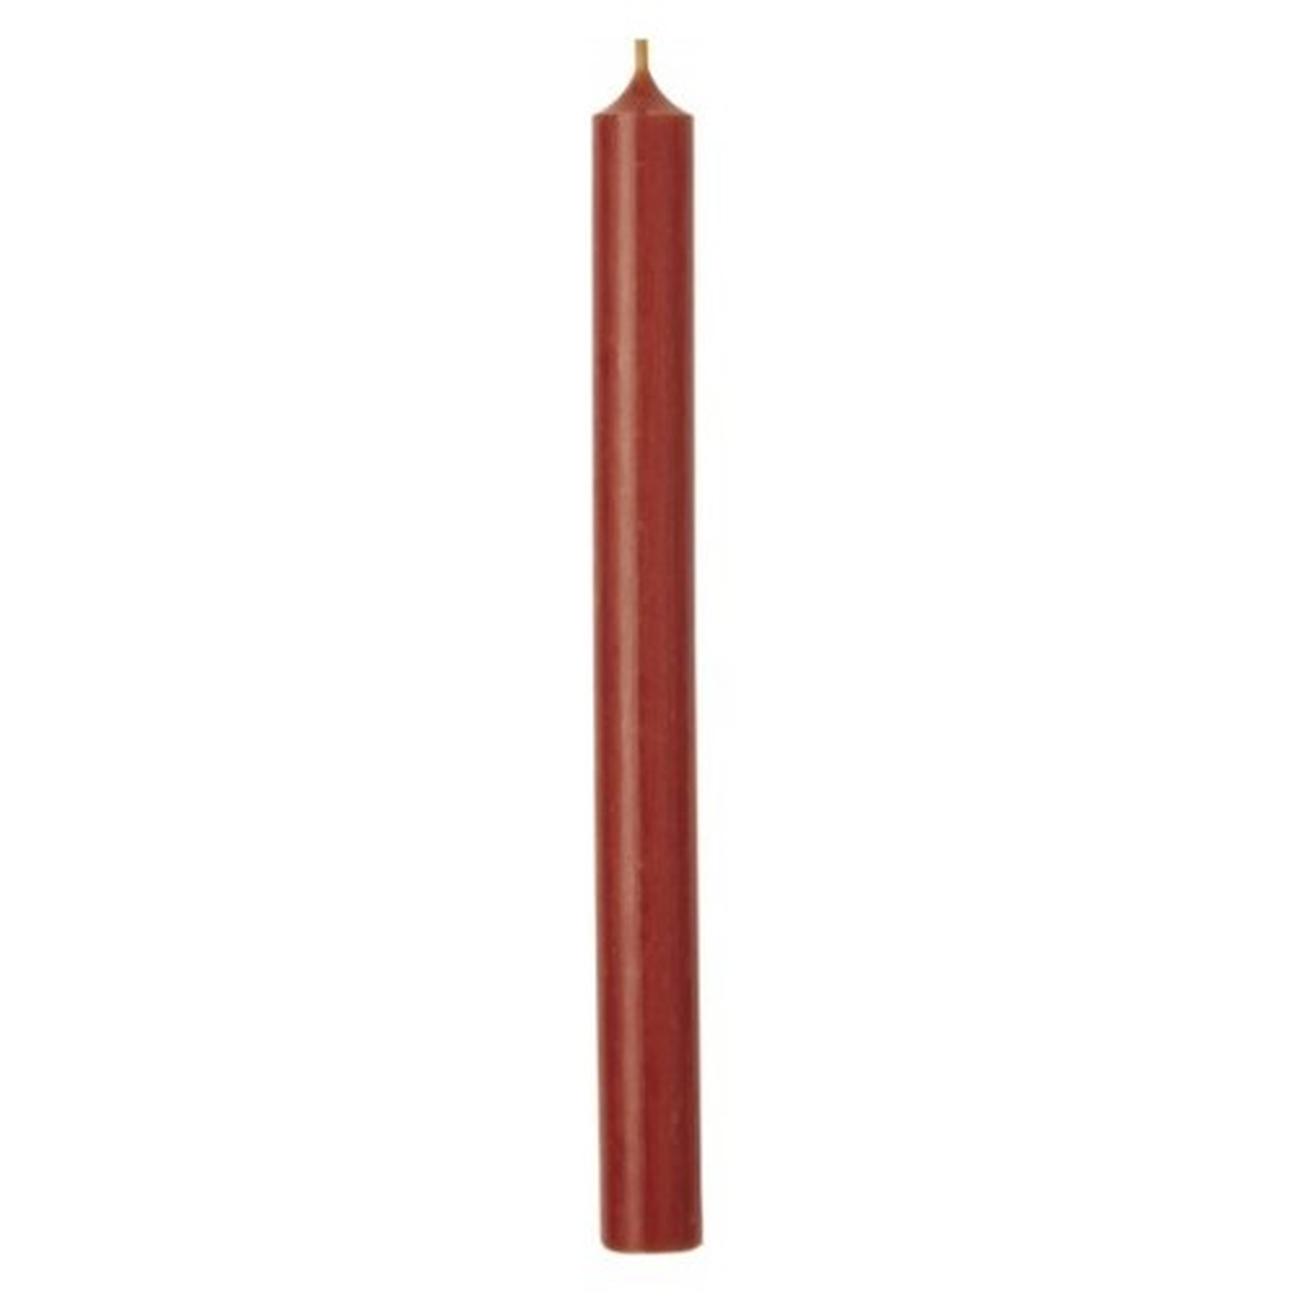 ihr-cylinder-candle-dusty-orange - IHR Cylinder Candle Dusty Orange